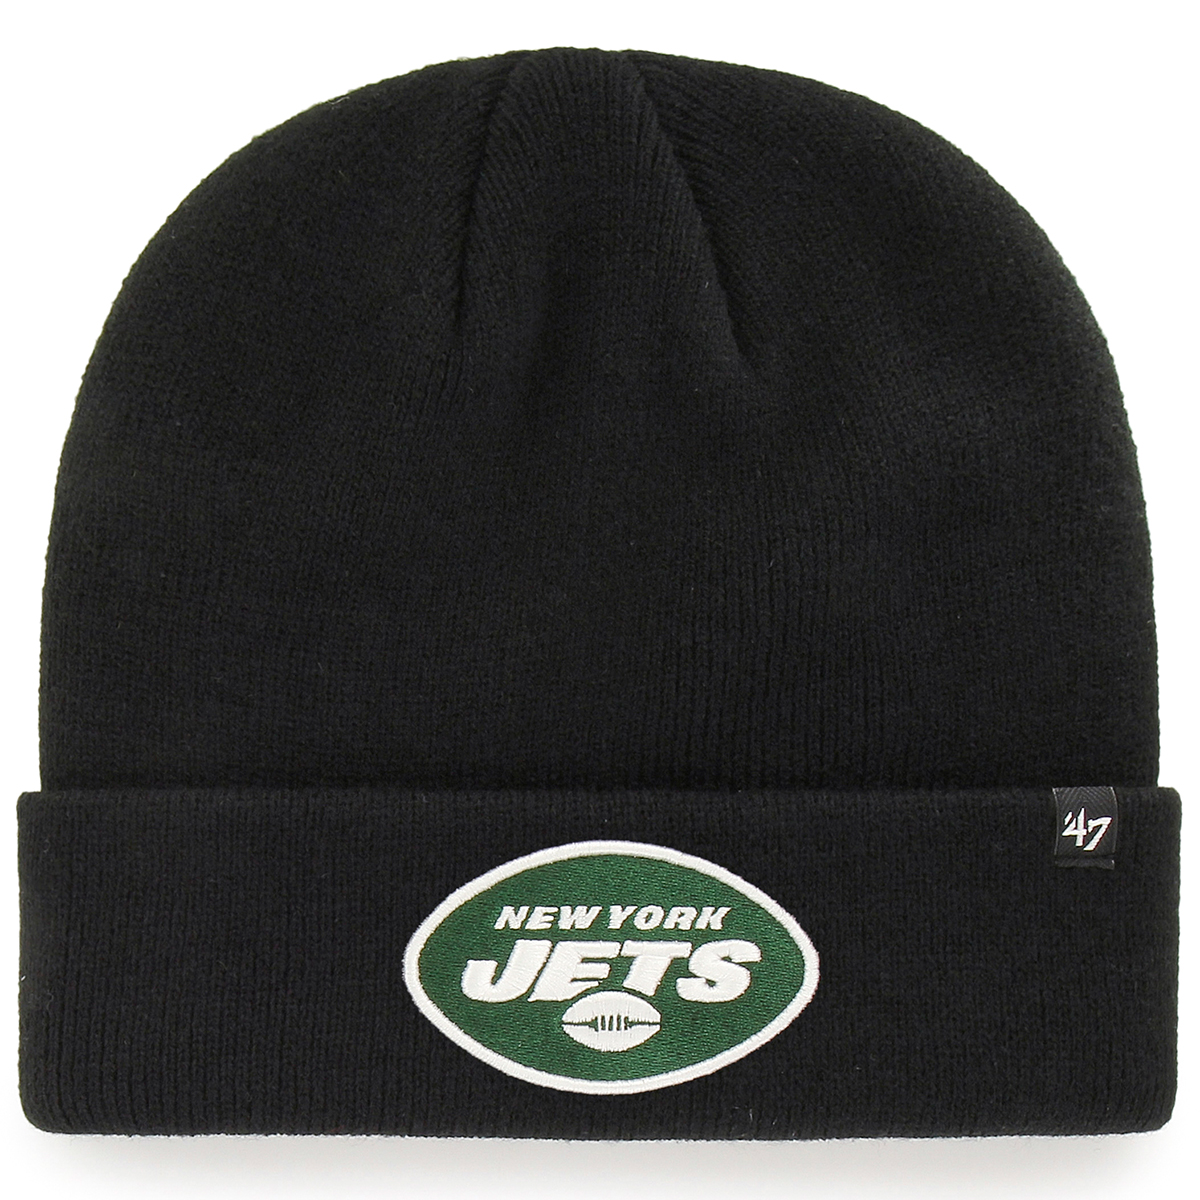 New York Jets Men's '47 Cuff Knit Hat